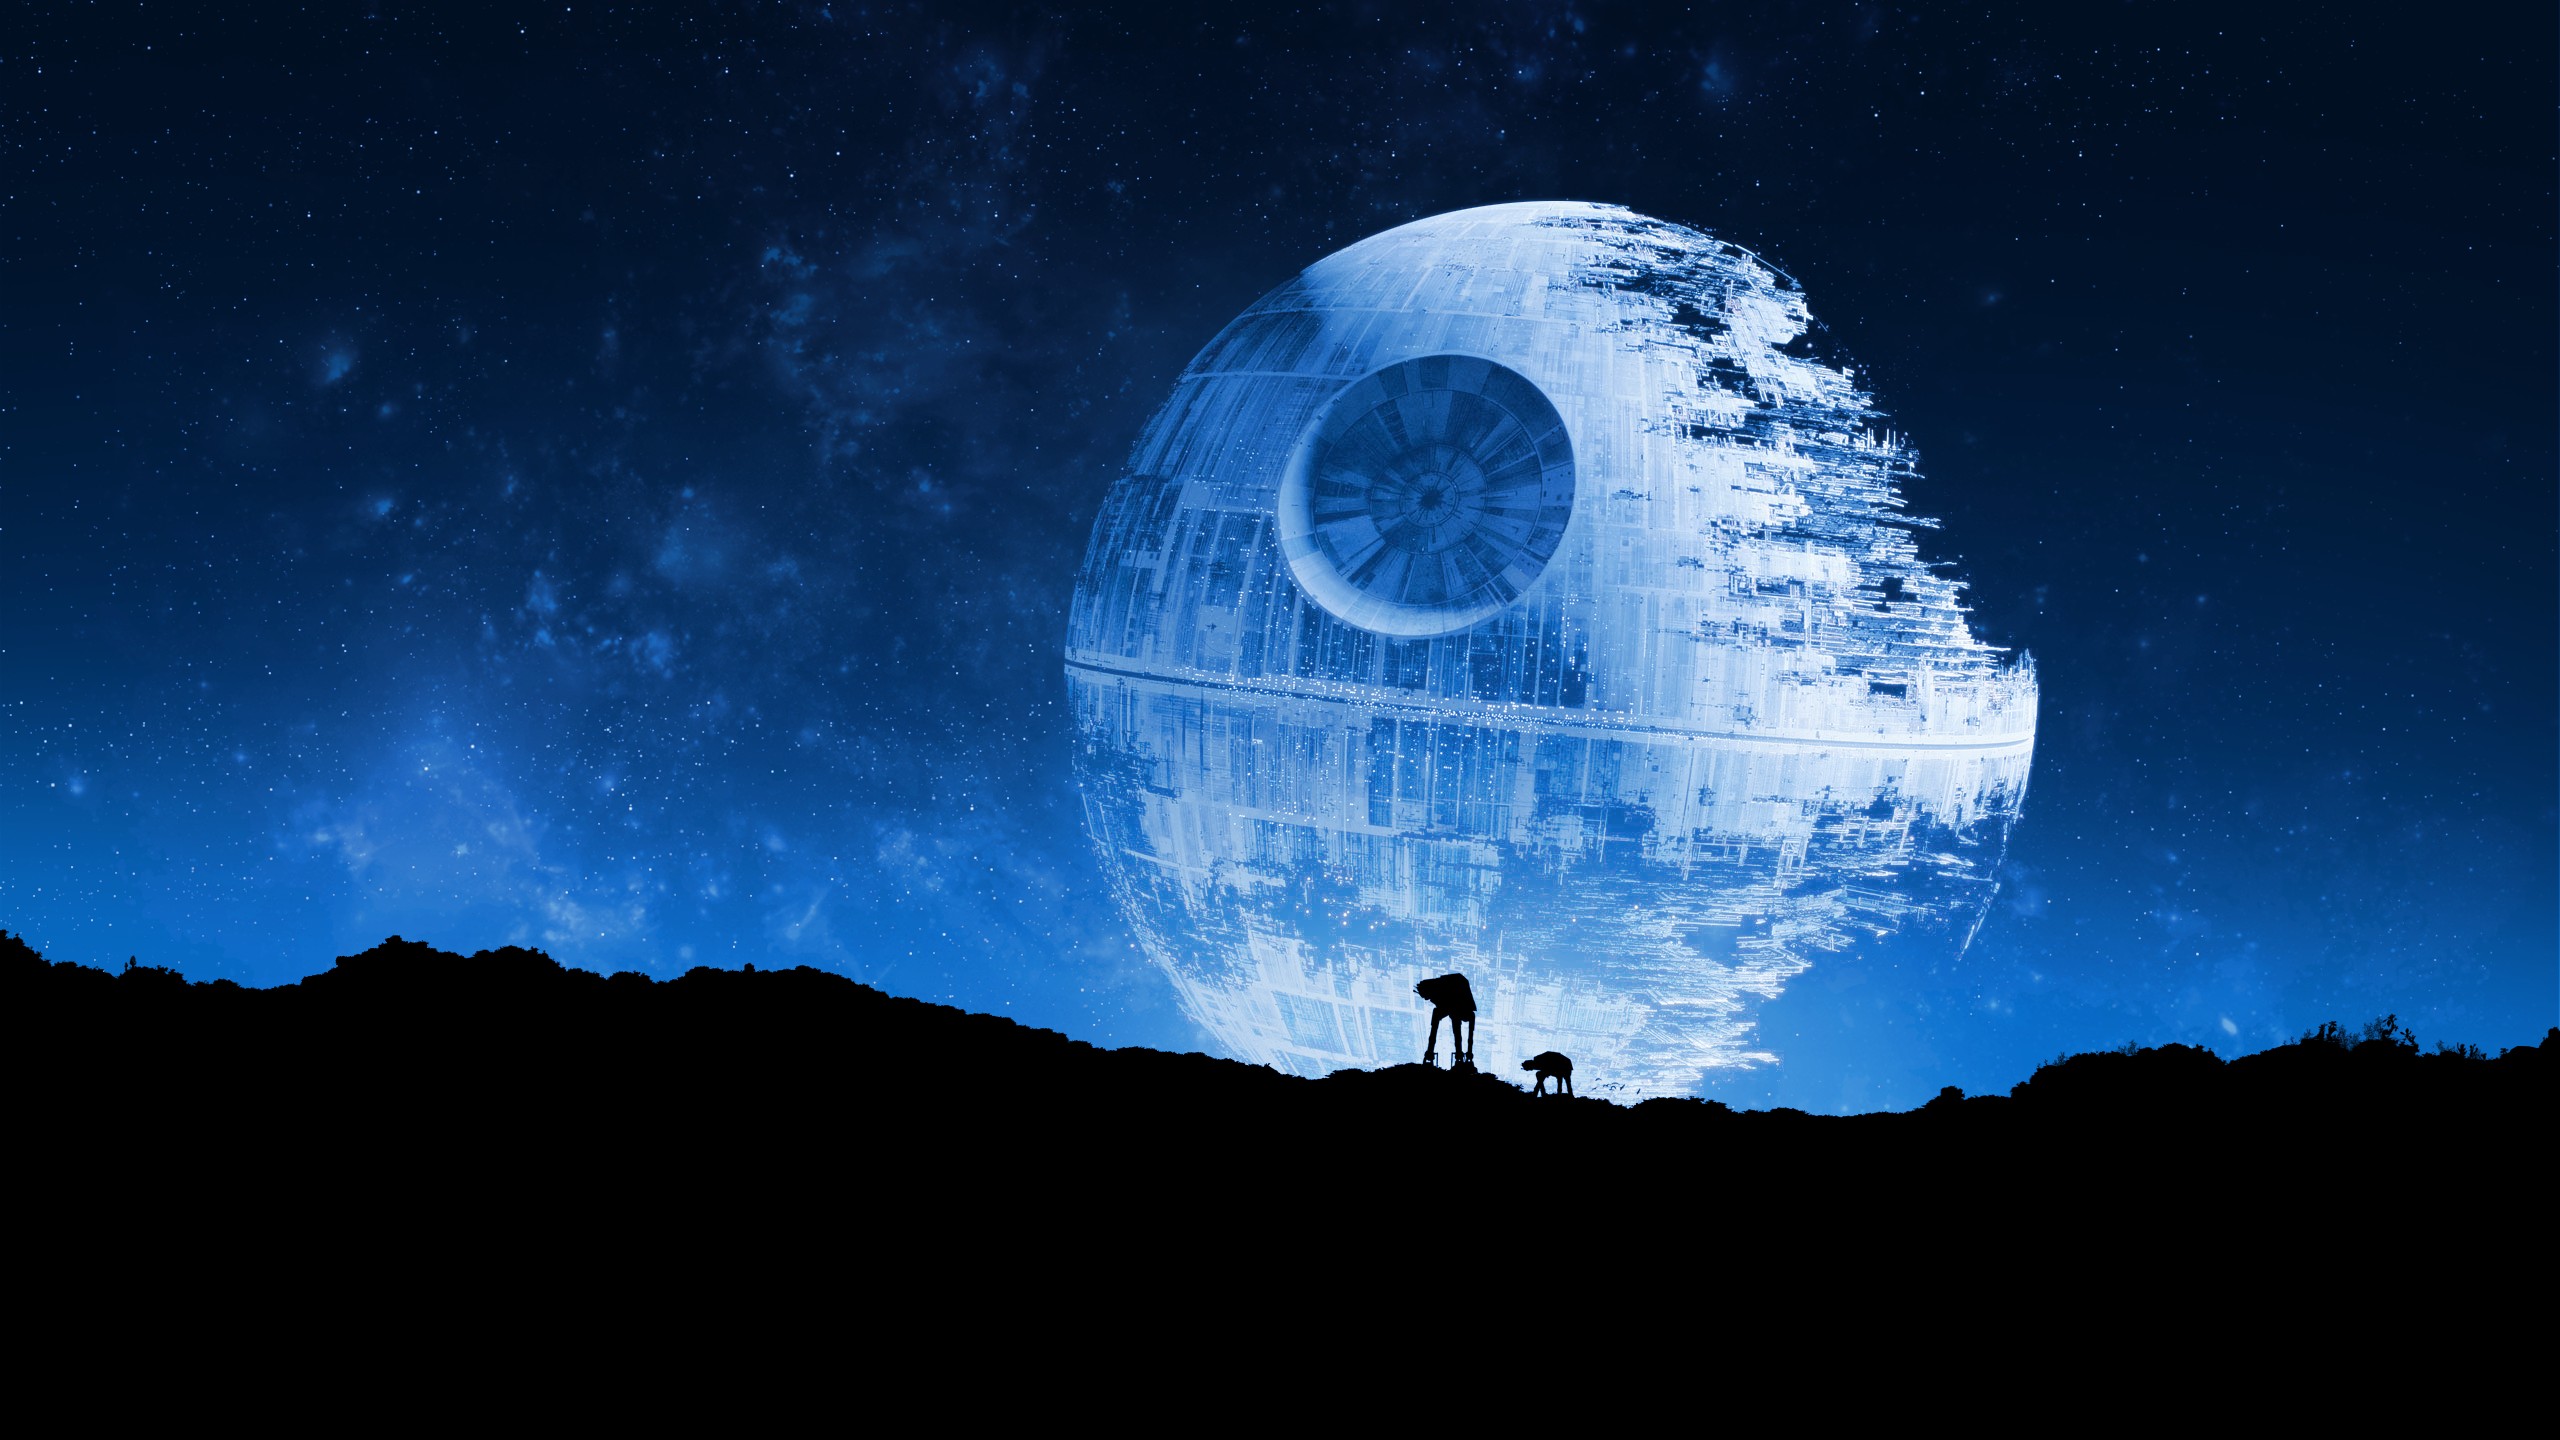 Star Wars, Death Star, AT AT, Space, Night sky Wallpaper